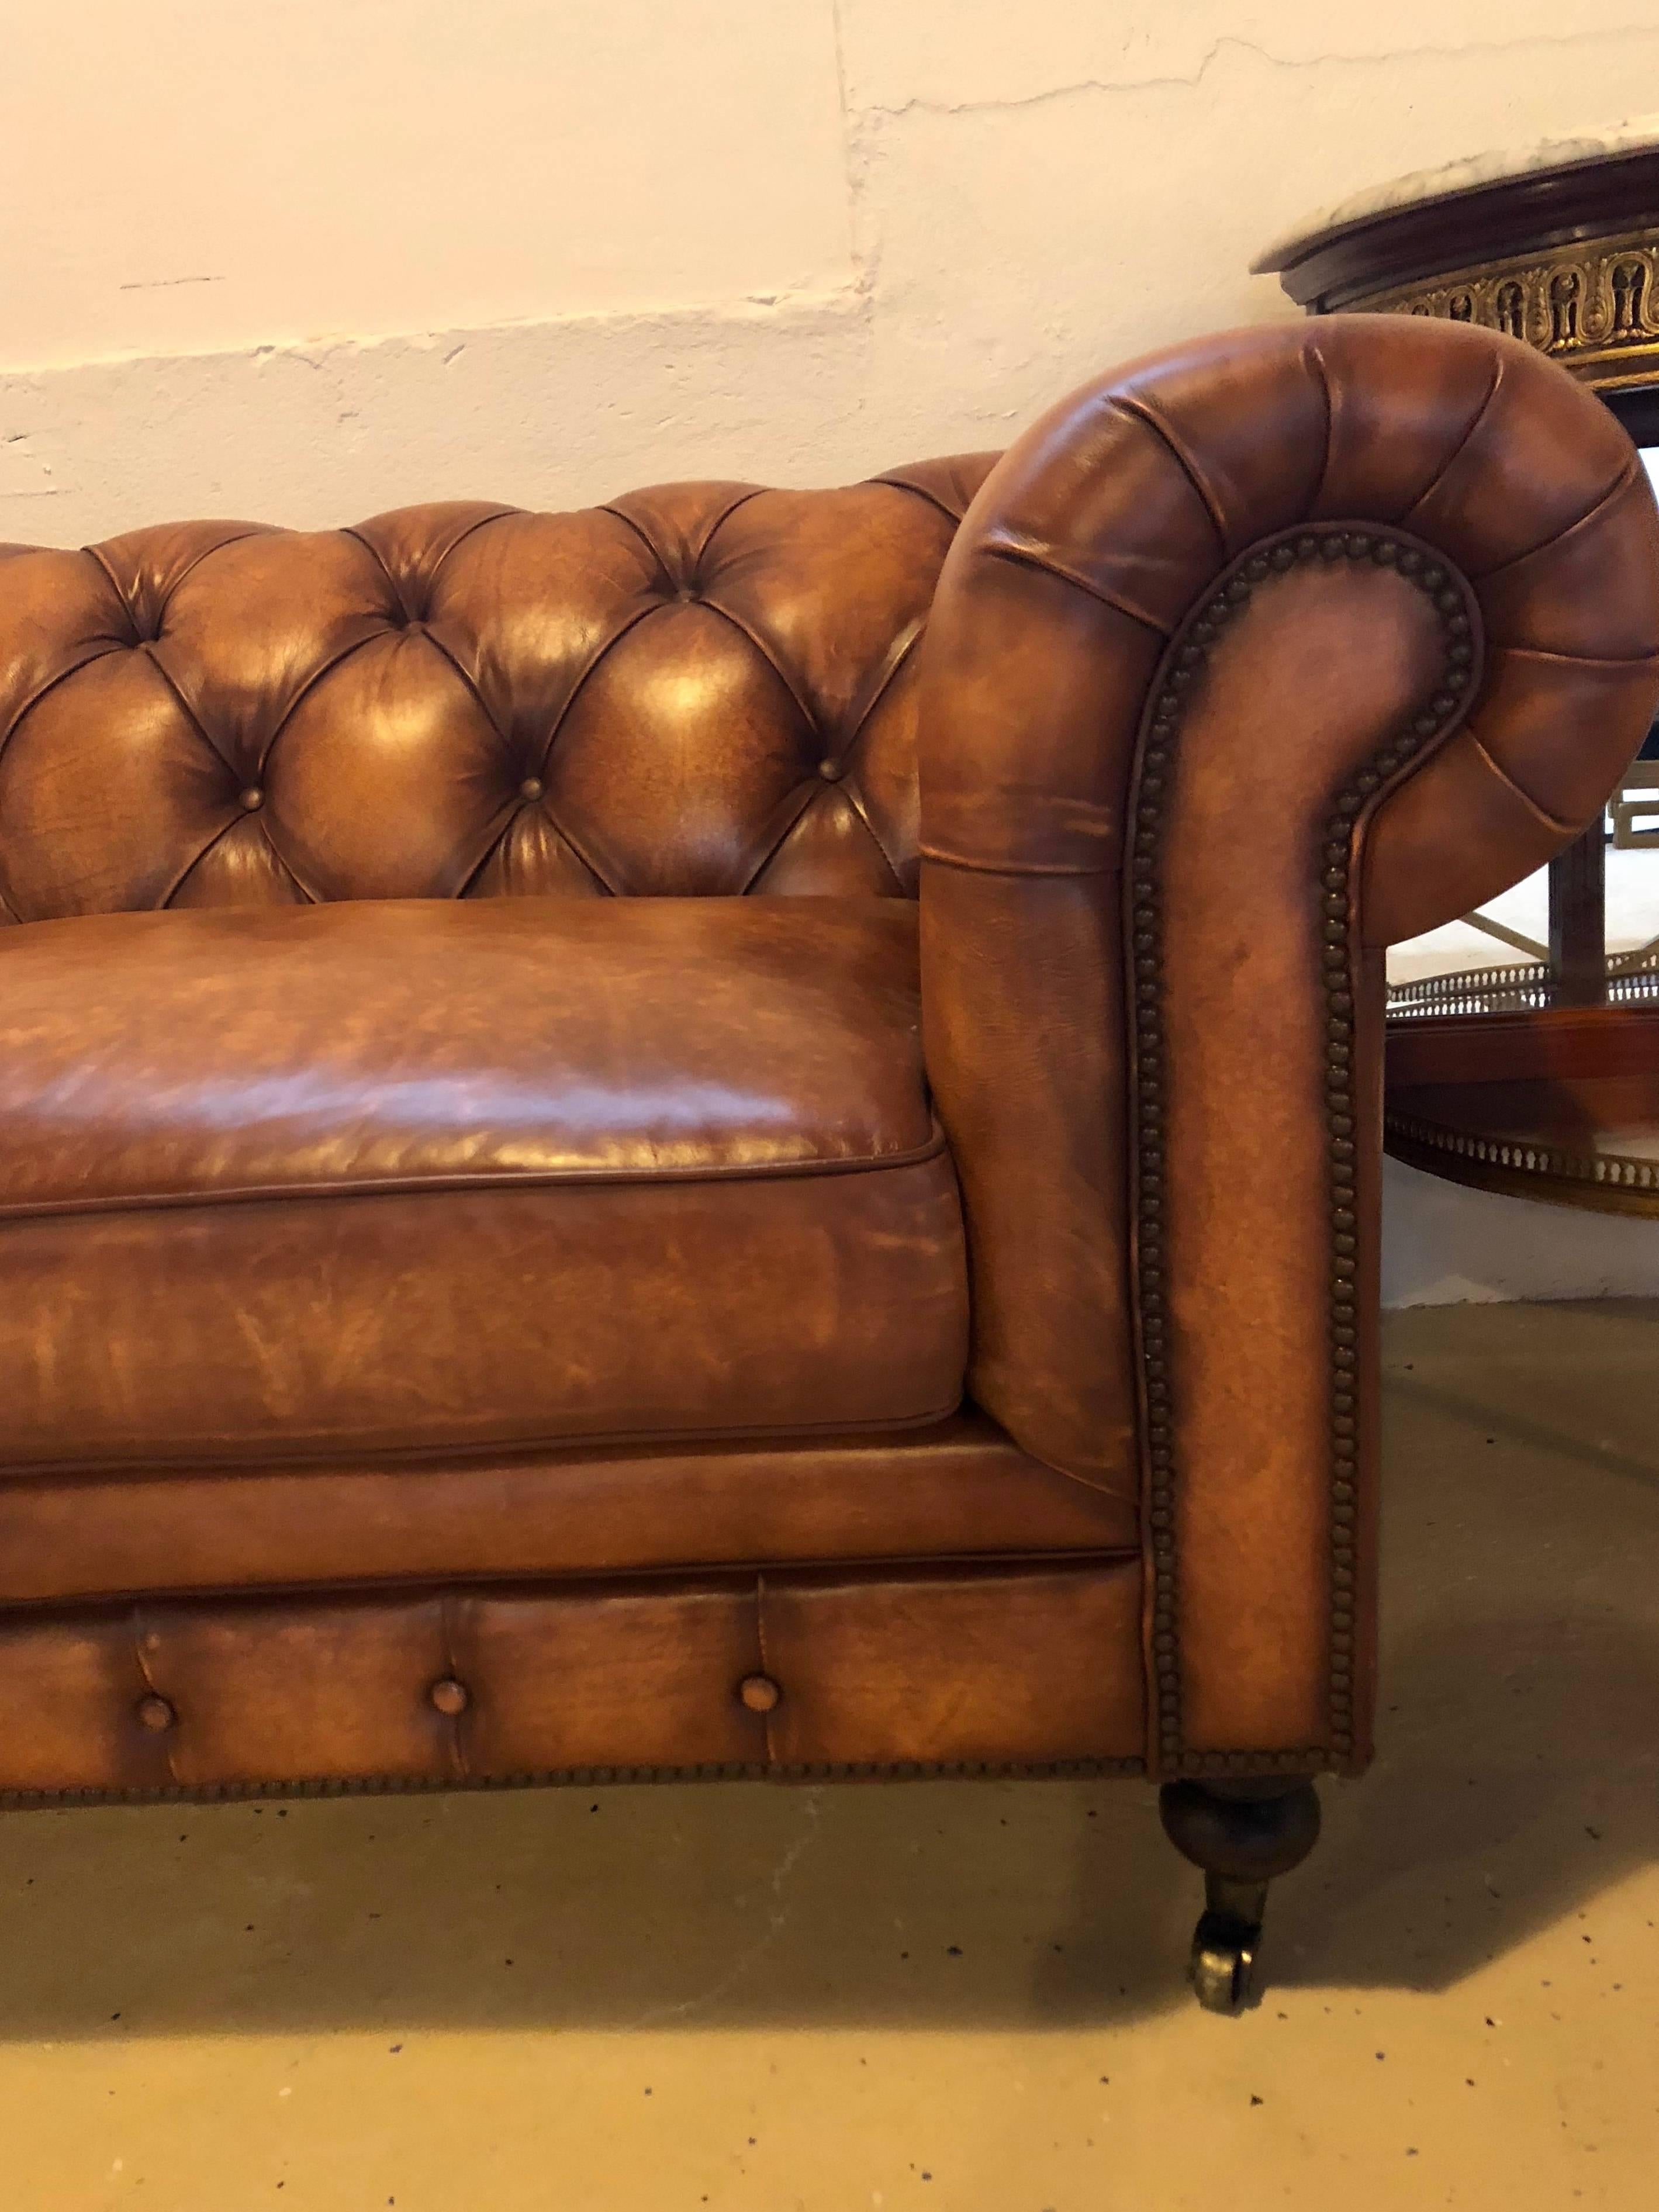 worn leather sofa